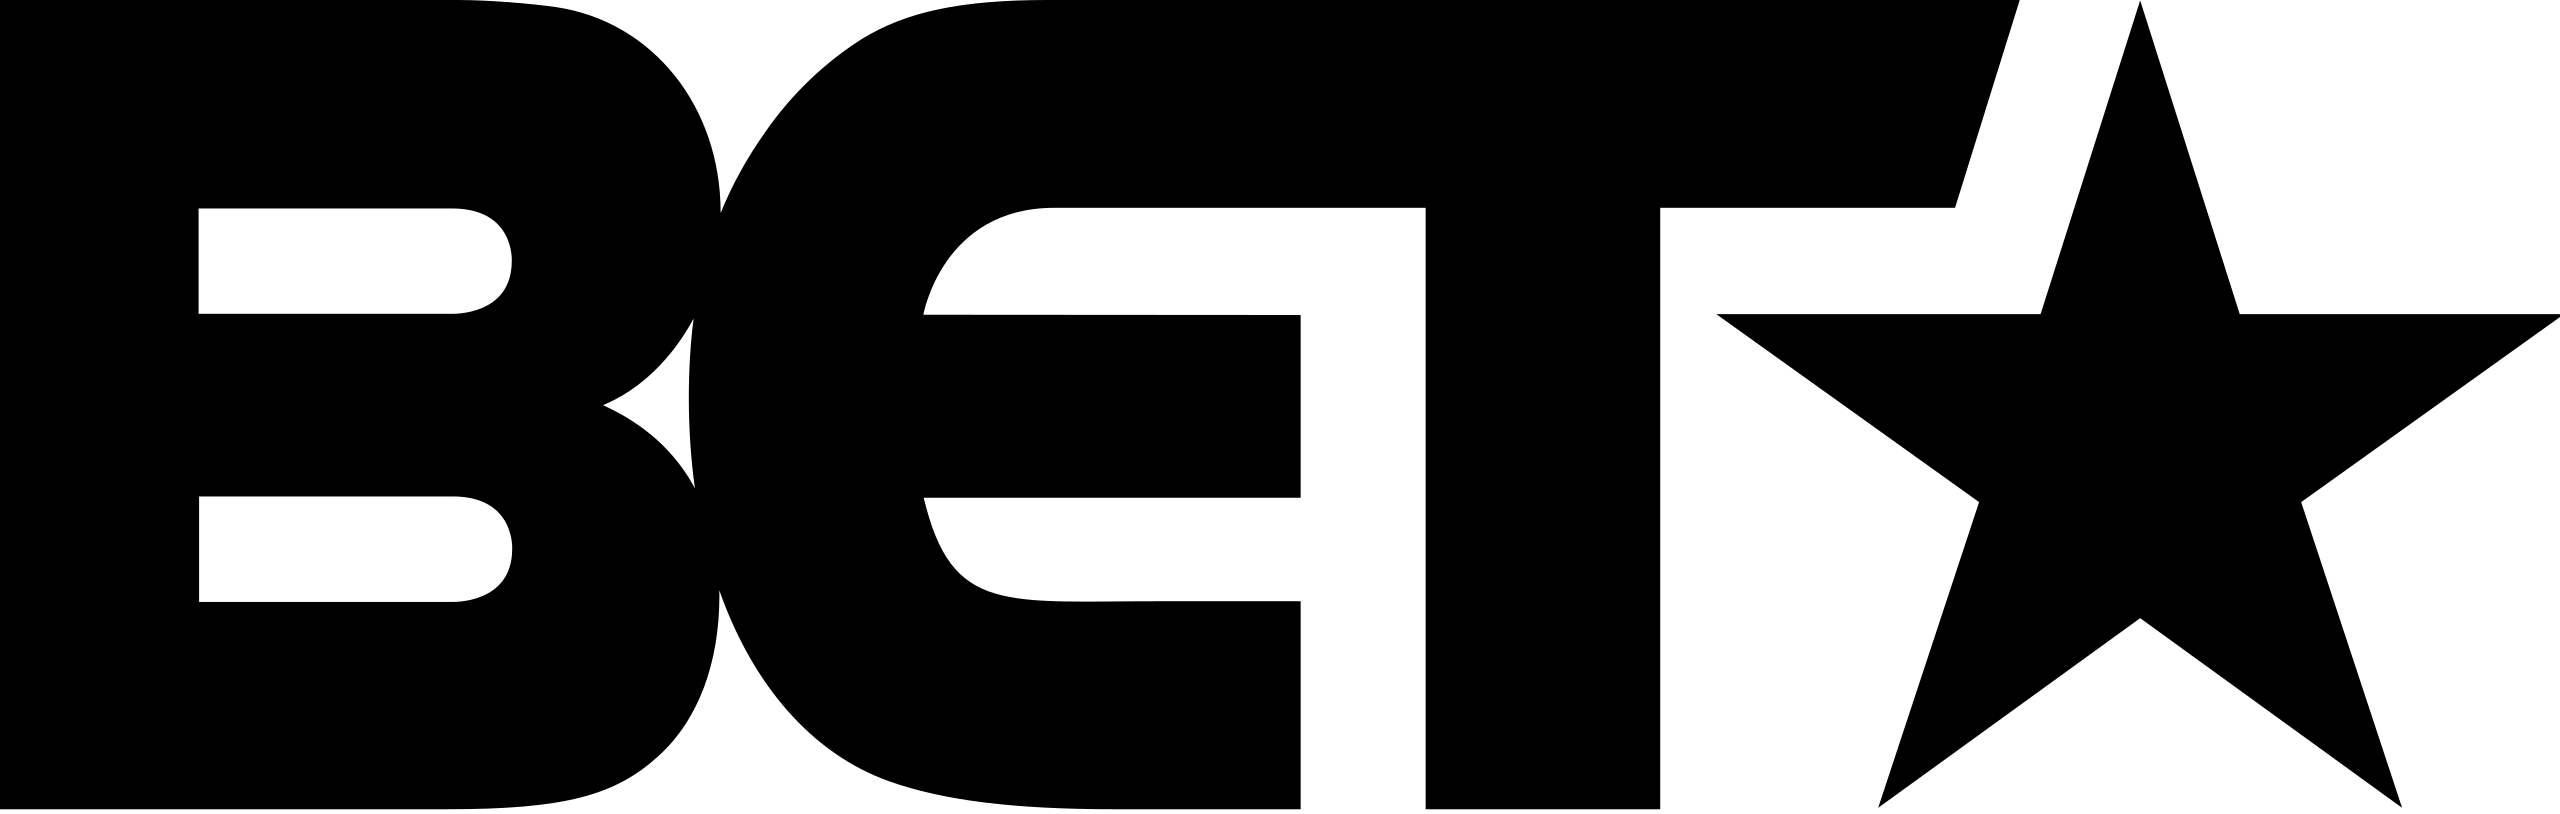 BET_Logo.svg